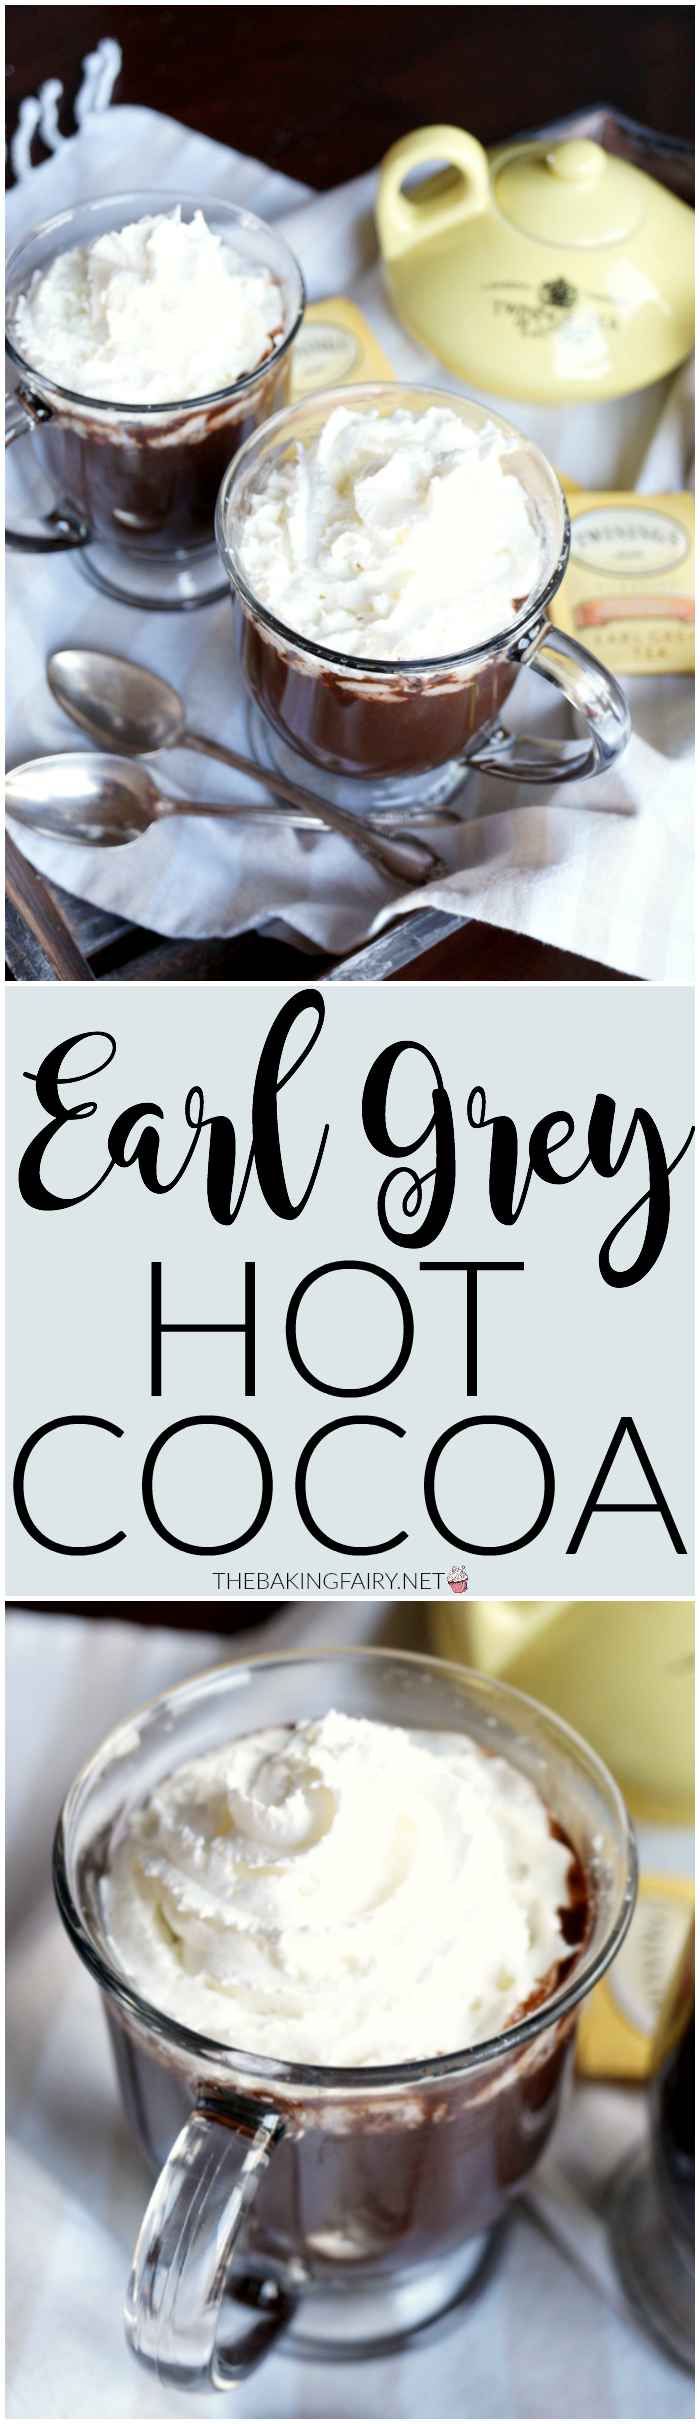 earl grey hot cocoa | The Baking Fairy